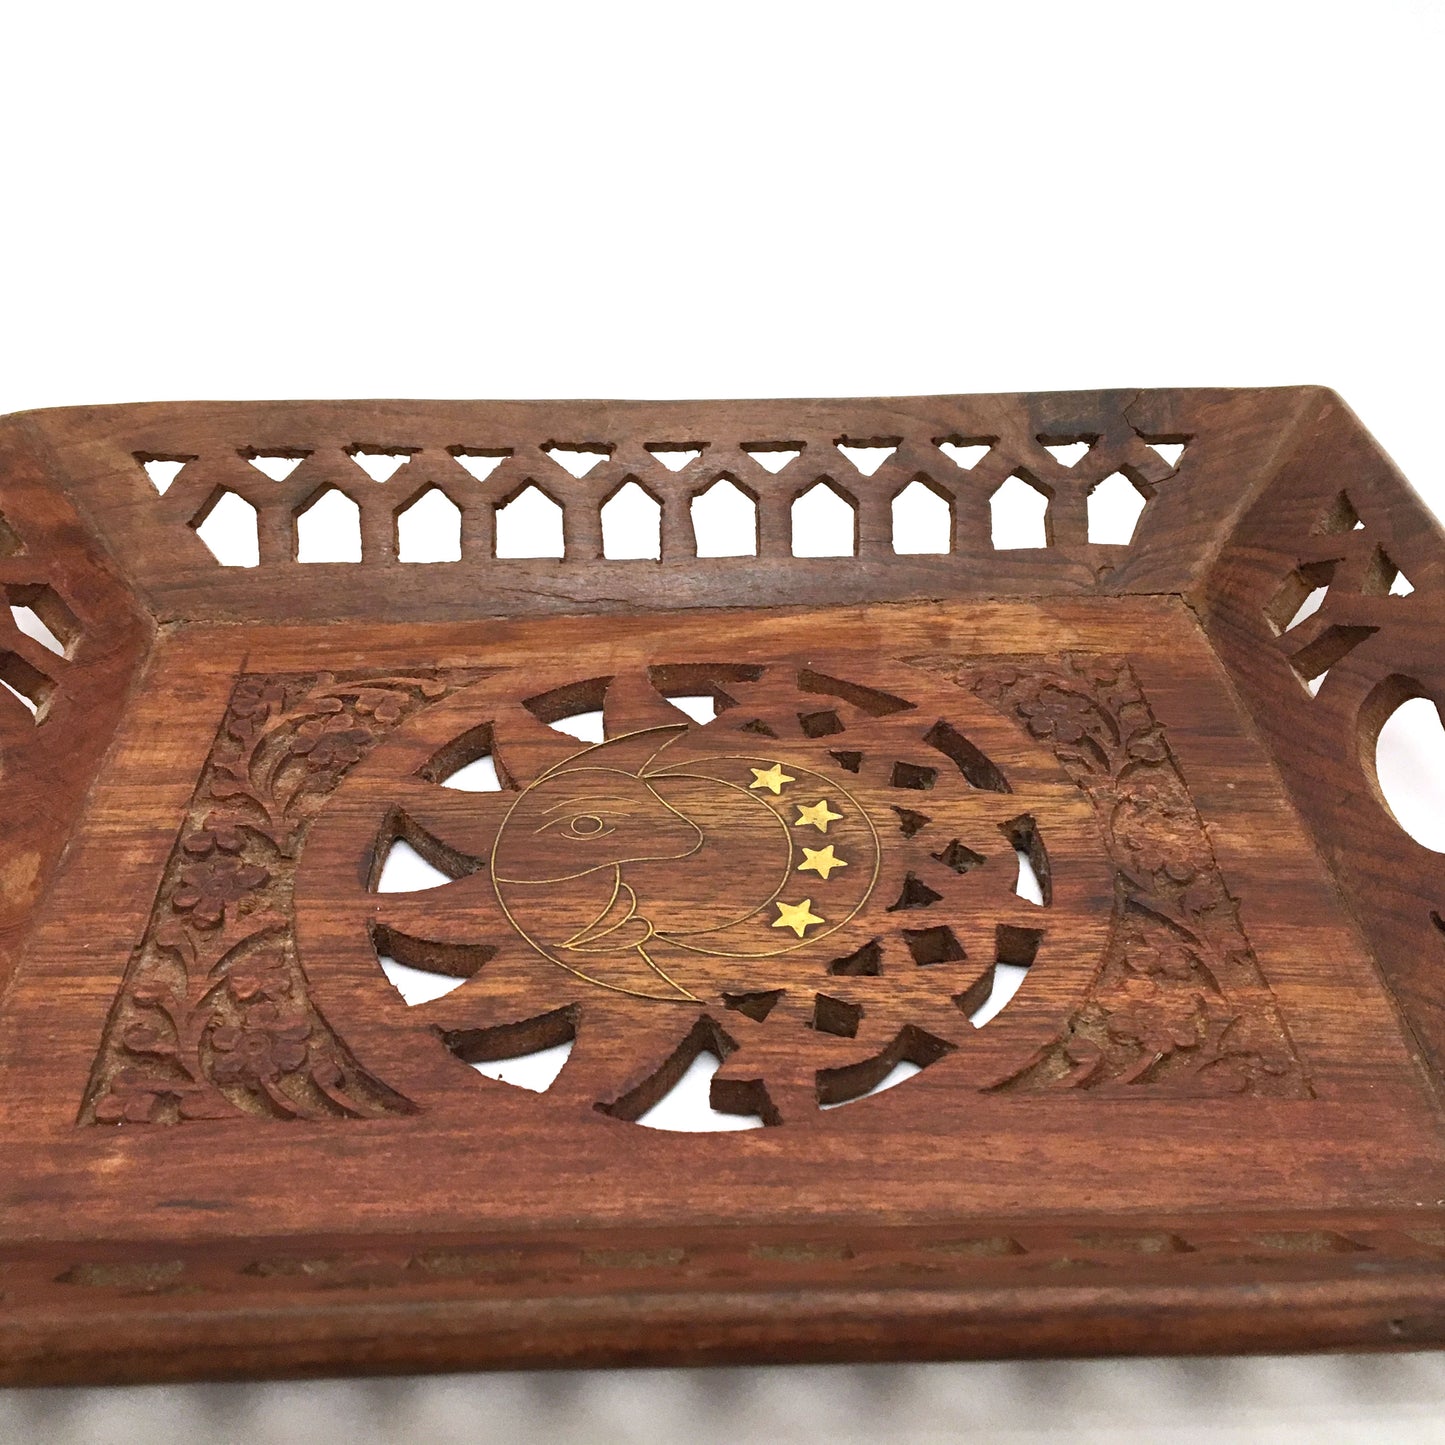 Vintage Rustic India All Natural Wooden Decorative Handmade Sheesham Platter Tra - Montecinos Ethnic